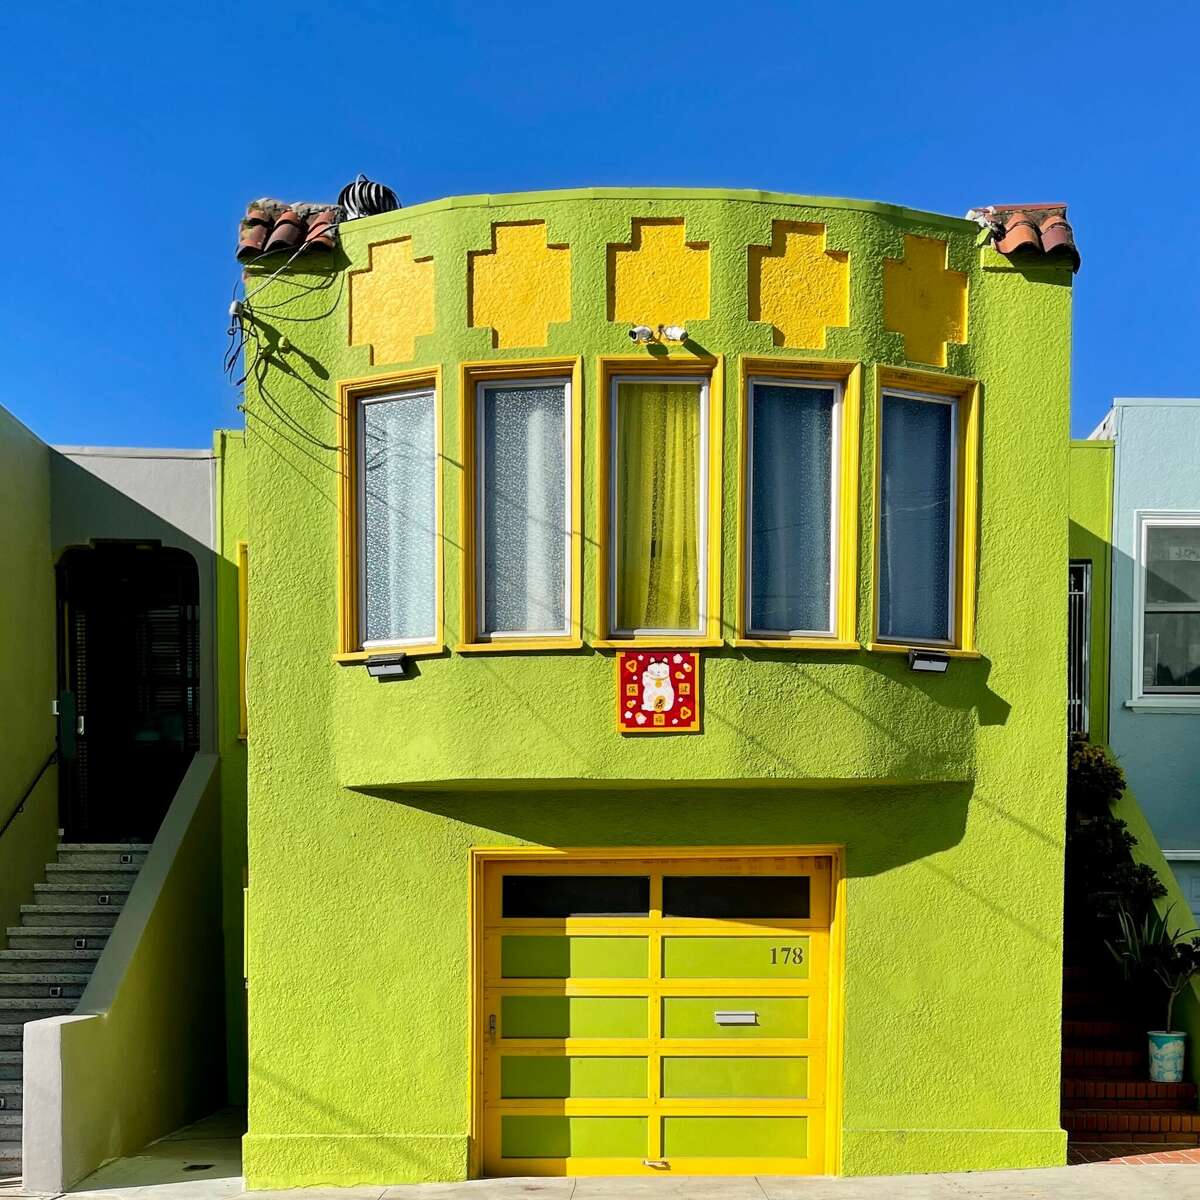 Julie Gebhardt captures the architectural beauty of San Francisco on Instagram @ juliegeb.